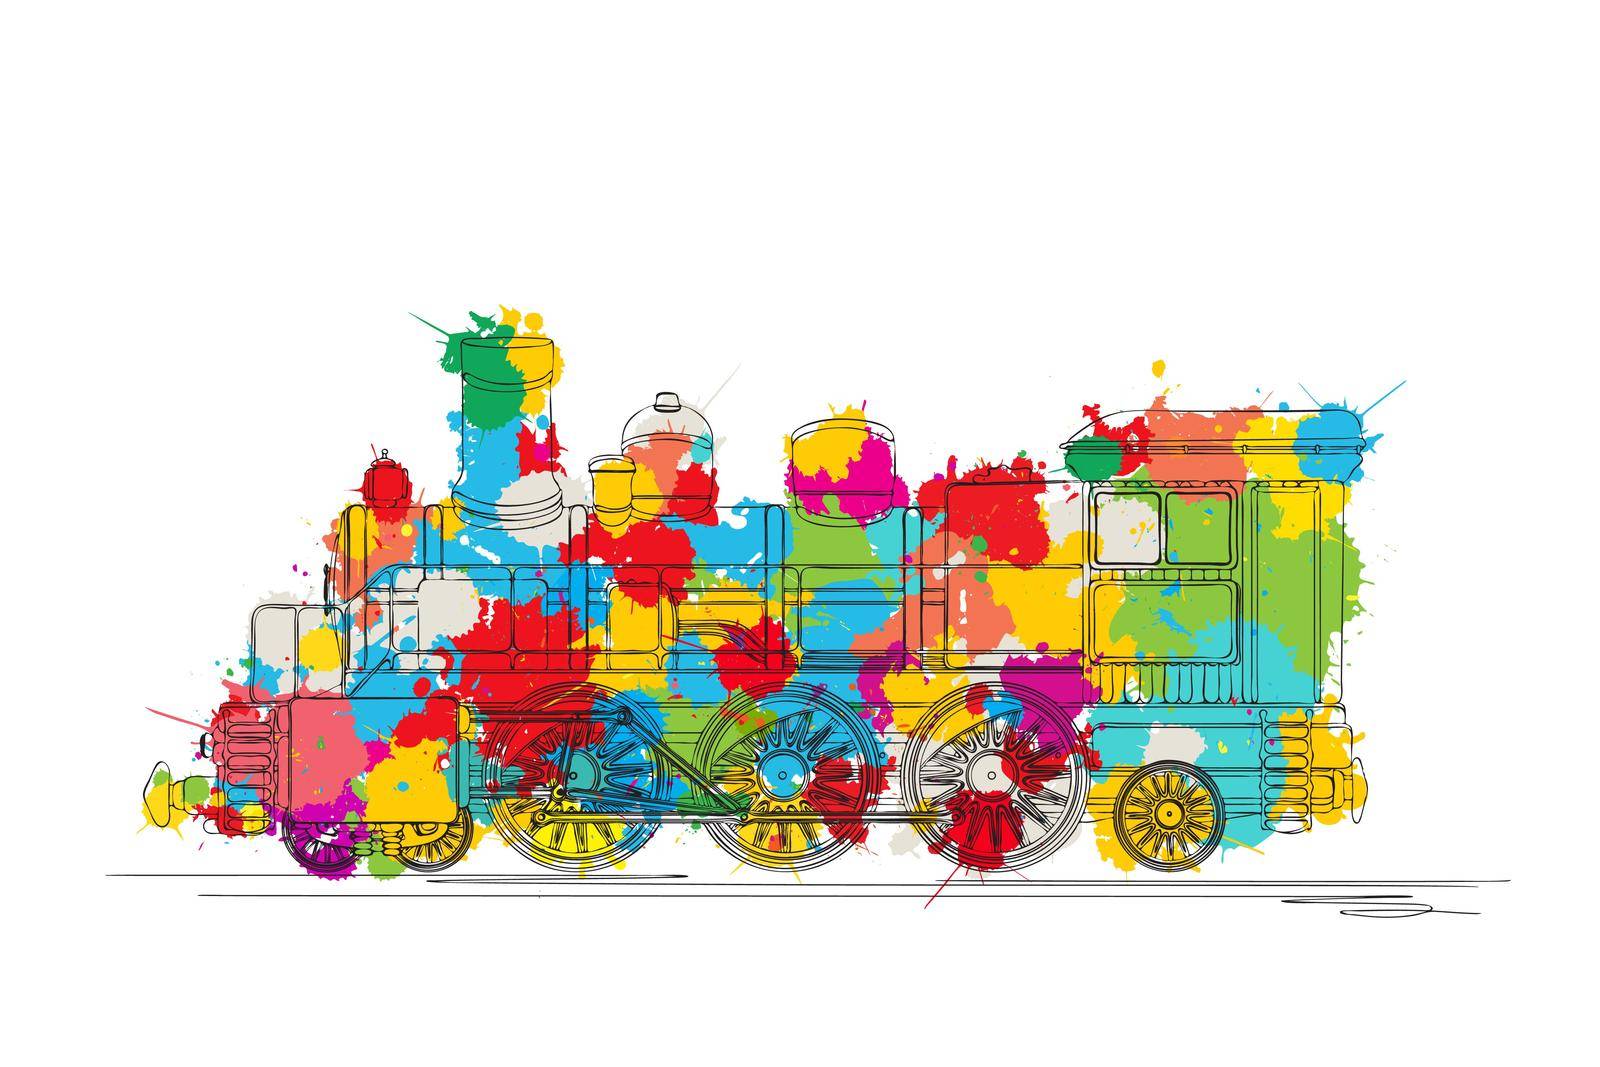 Steam locomotive sketch by Lirch